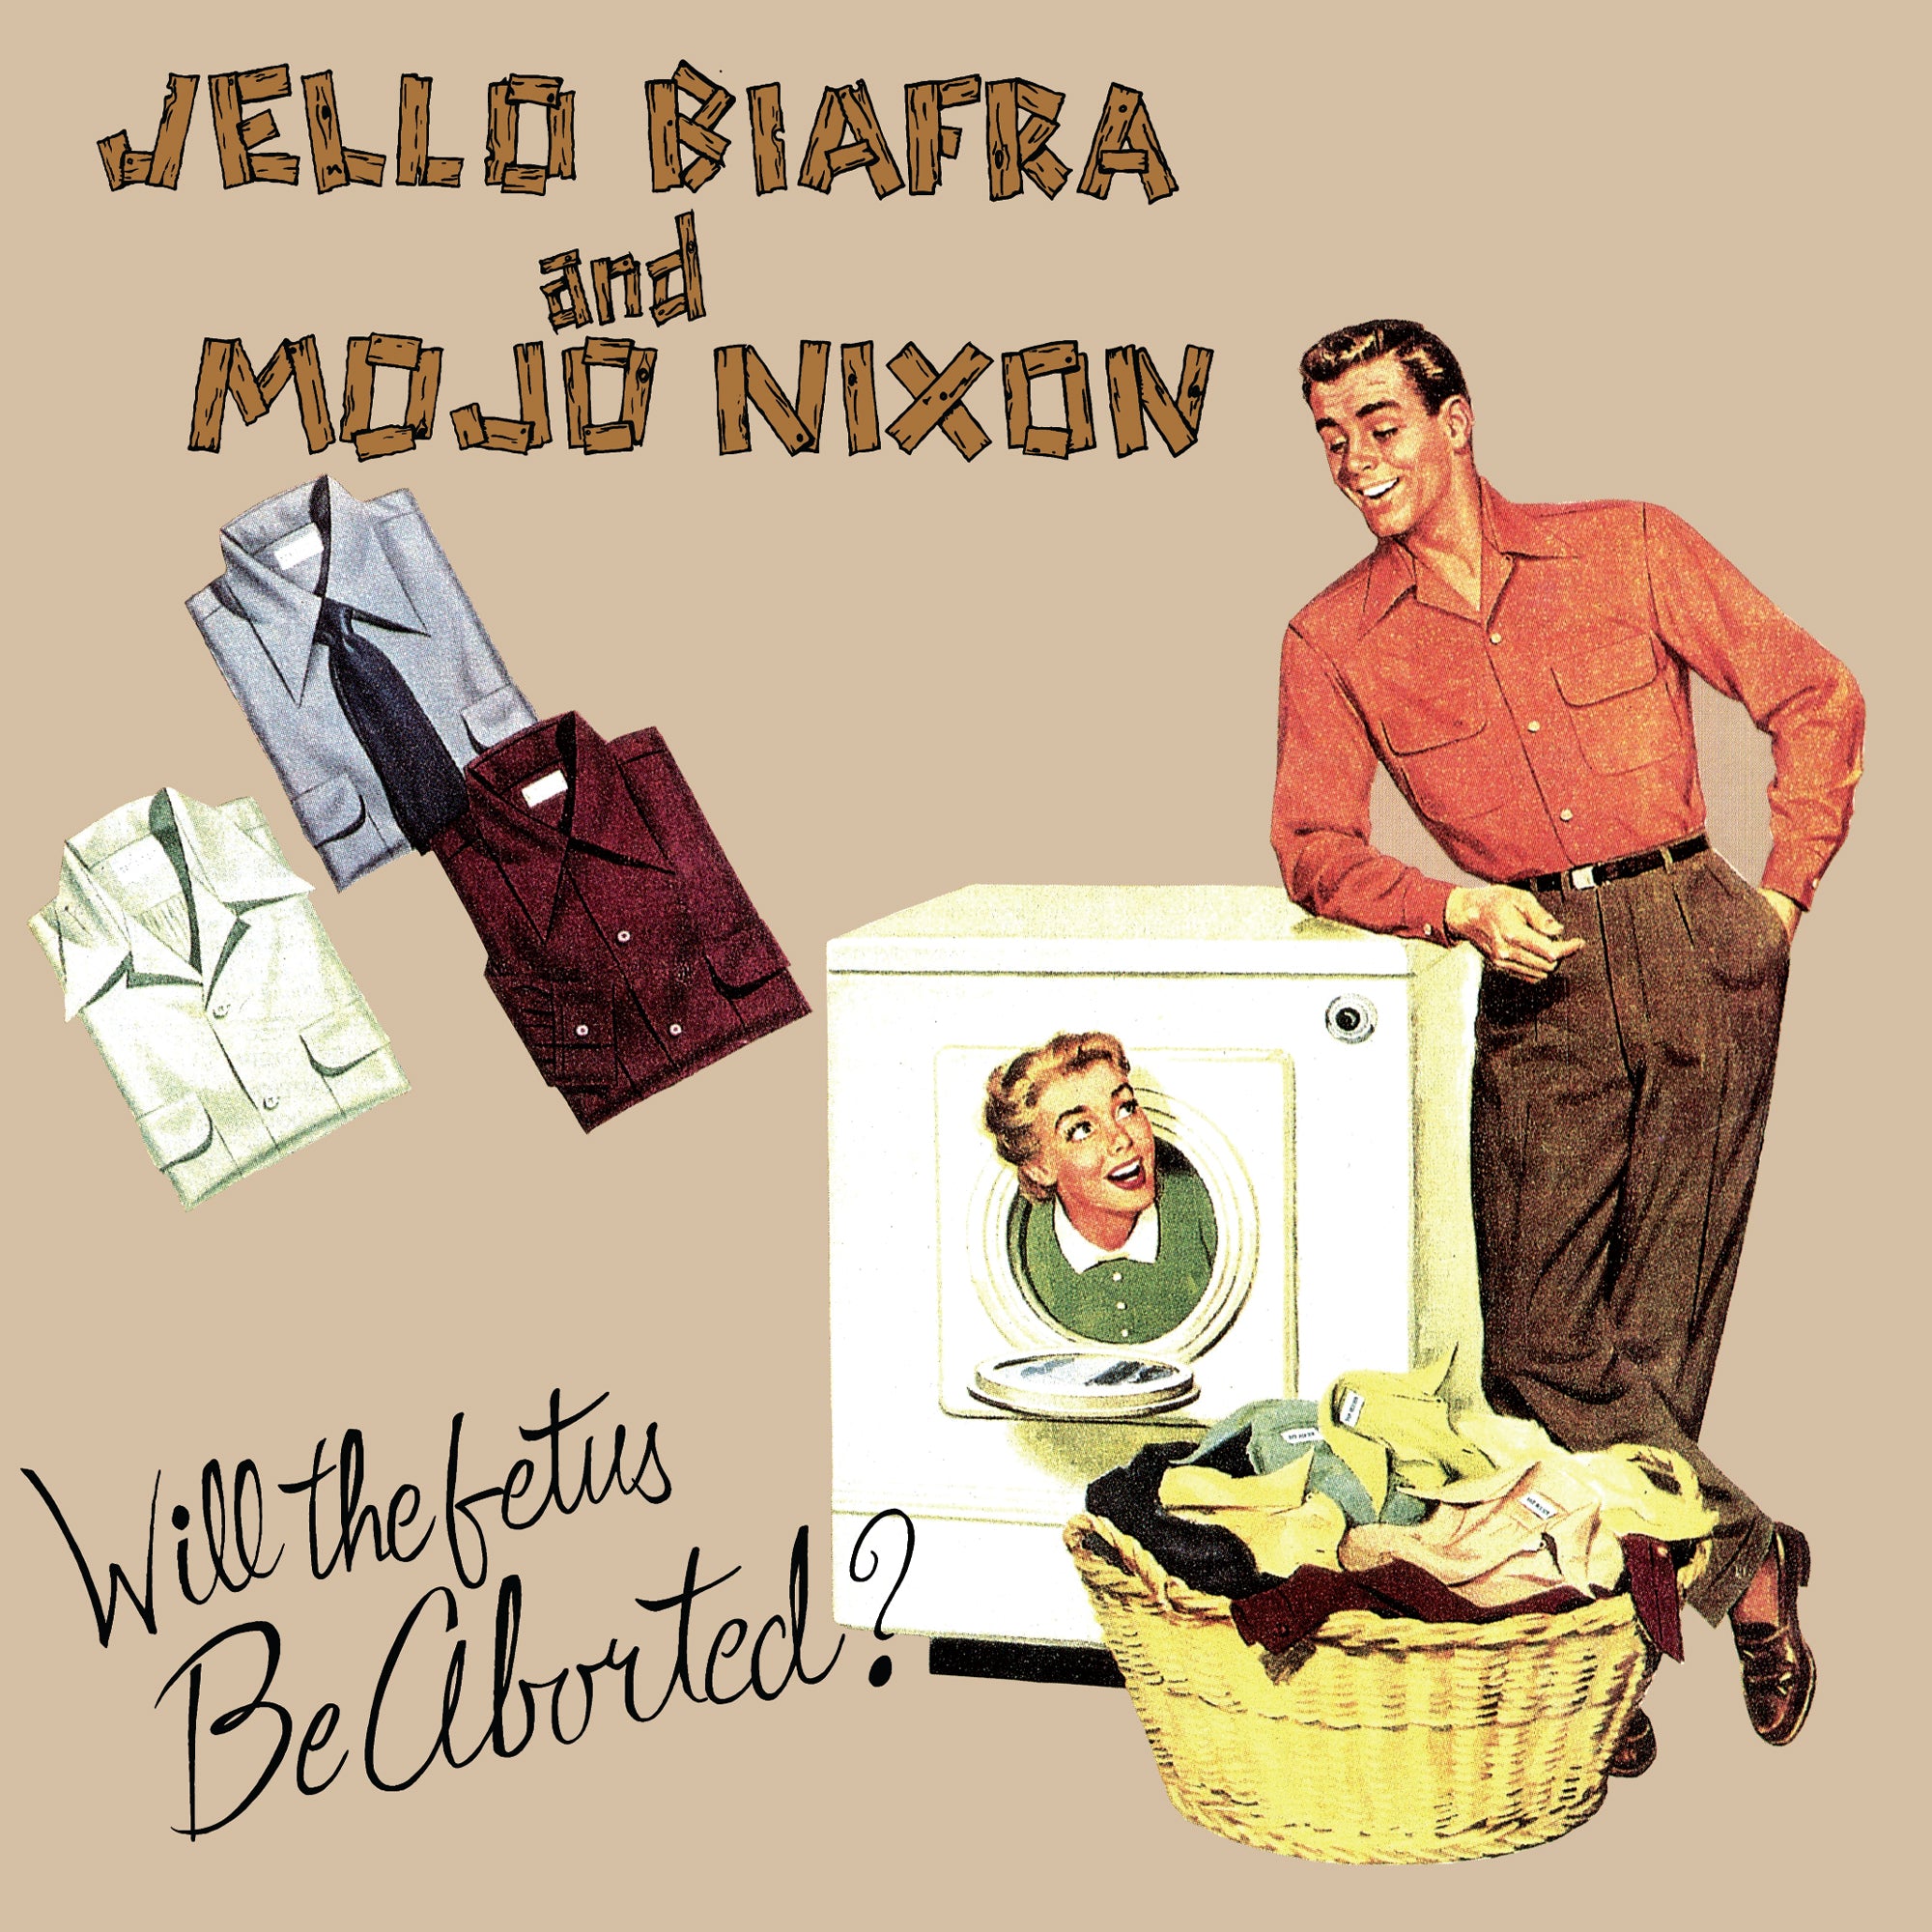 v136 - Jello Biafra & Mojo Nixon - "Will The Fetus Be Aborted?"